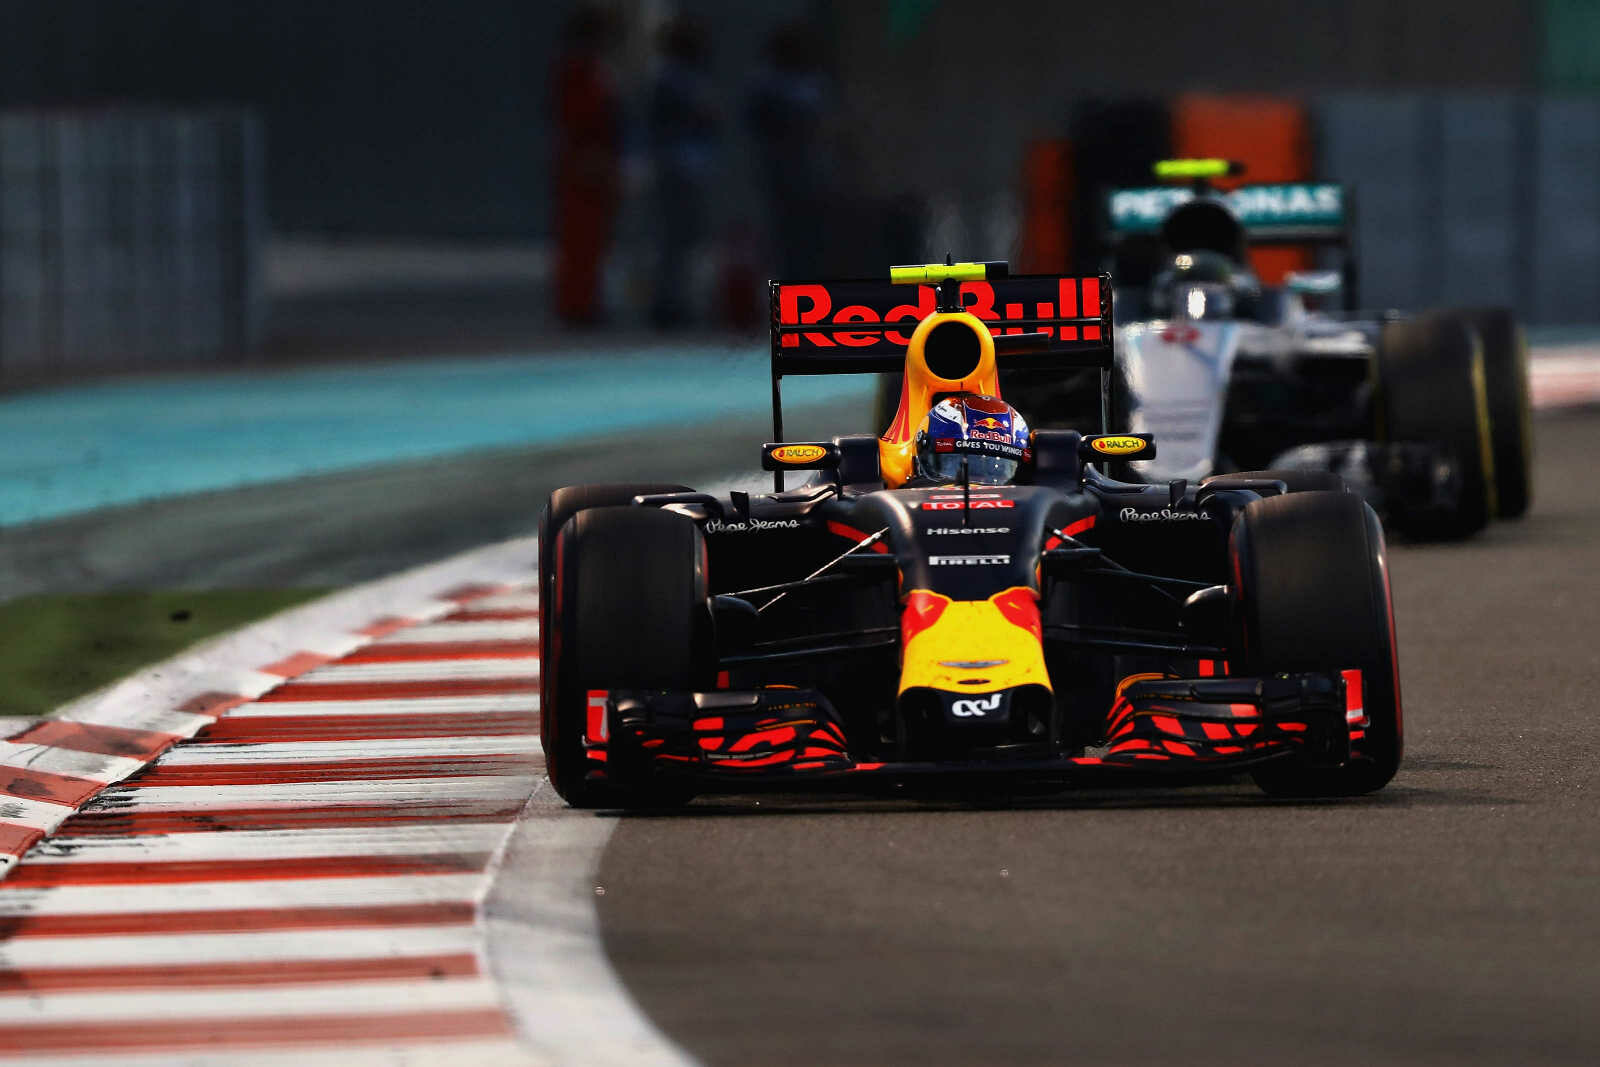 Max_Verstappen_Red_Bull_Racing_F1_Grand_Prix_Abu_Dhabi_2016